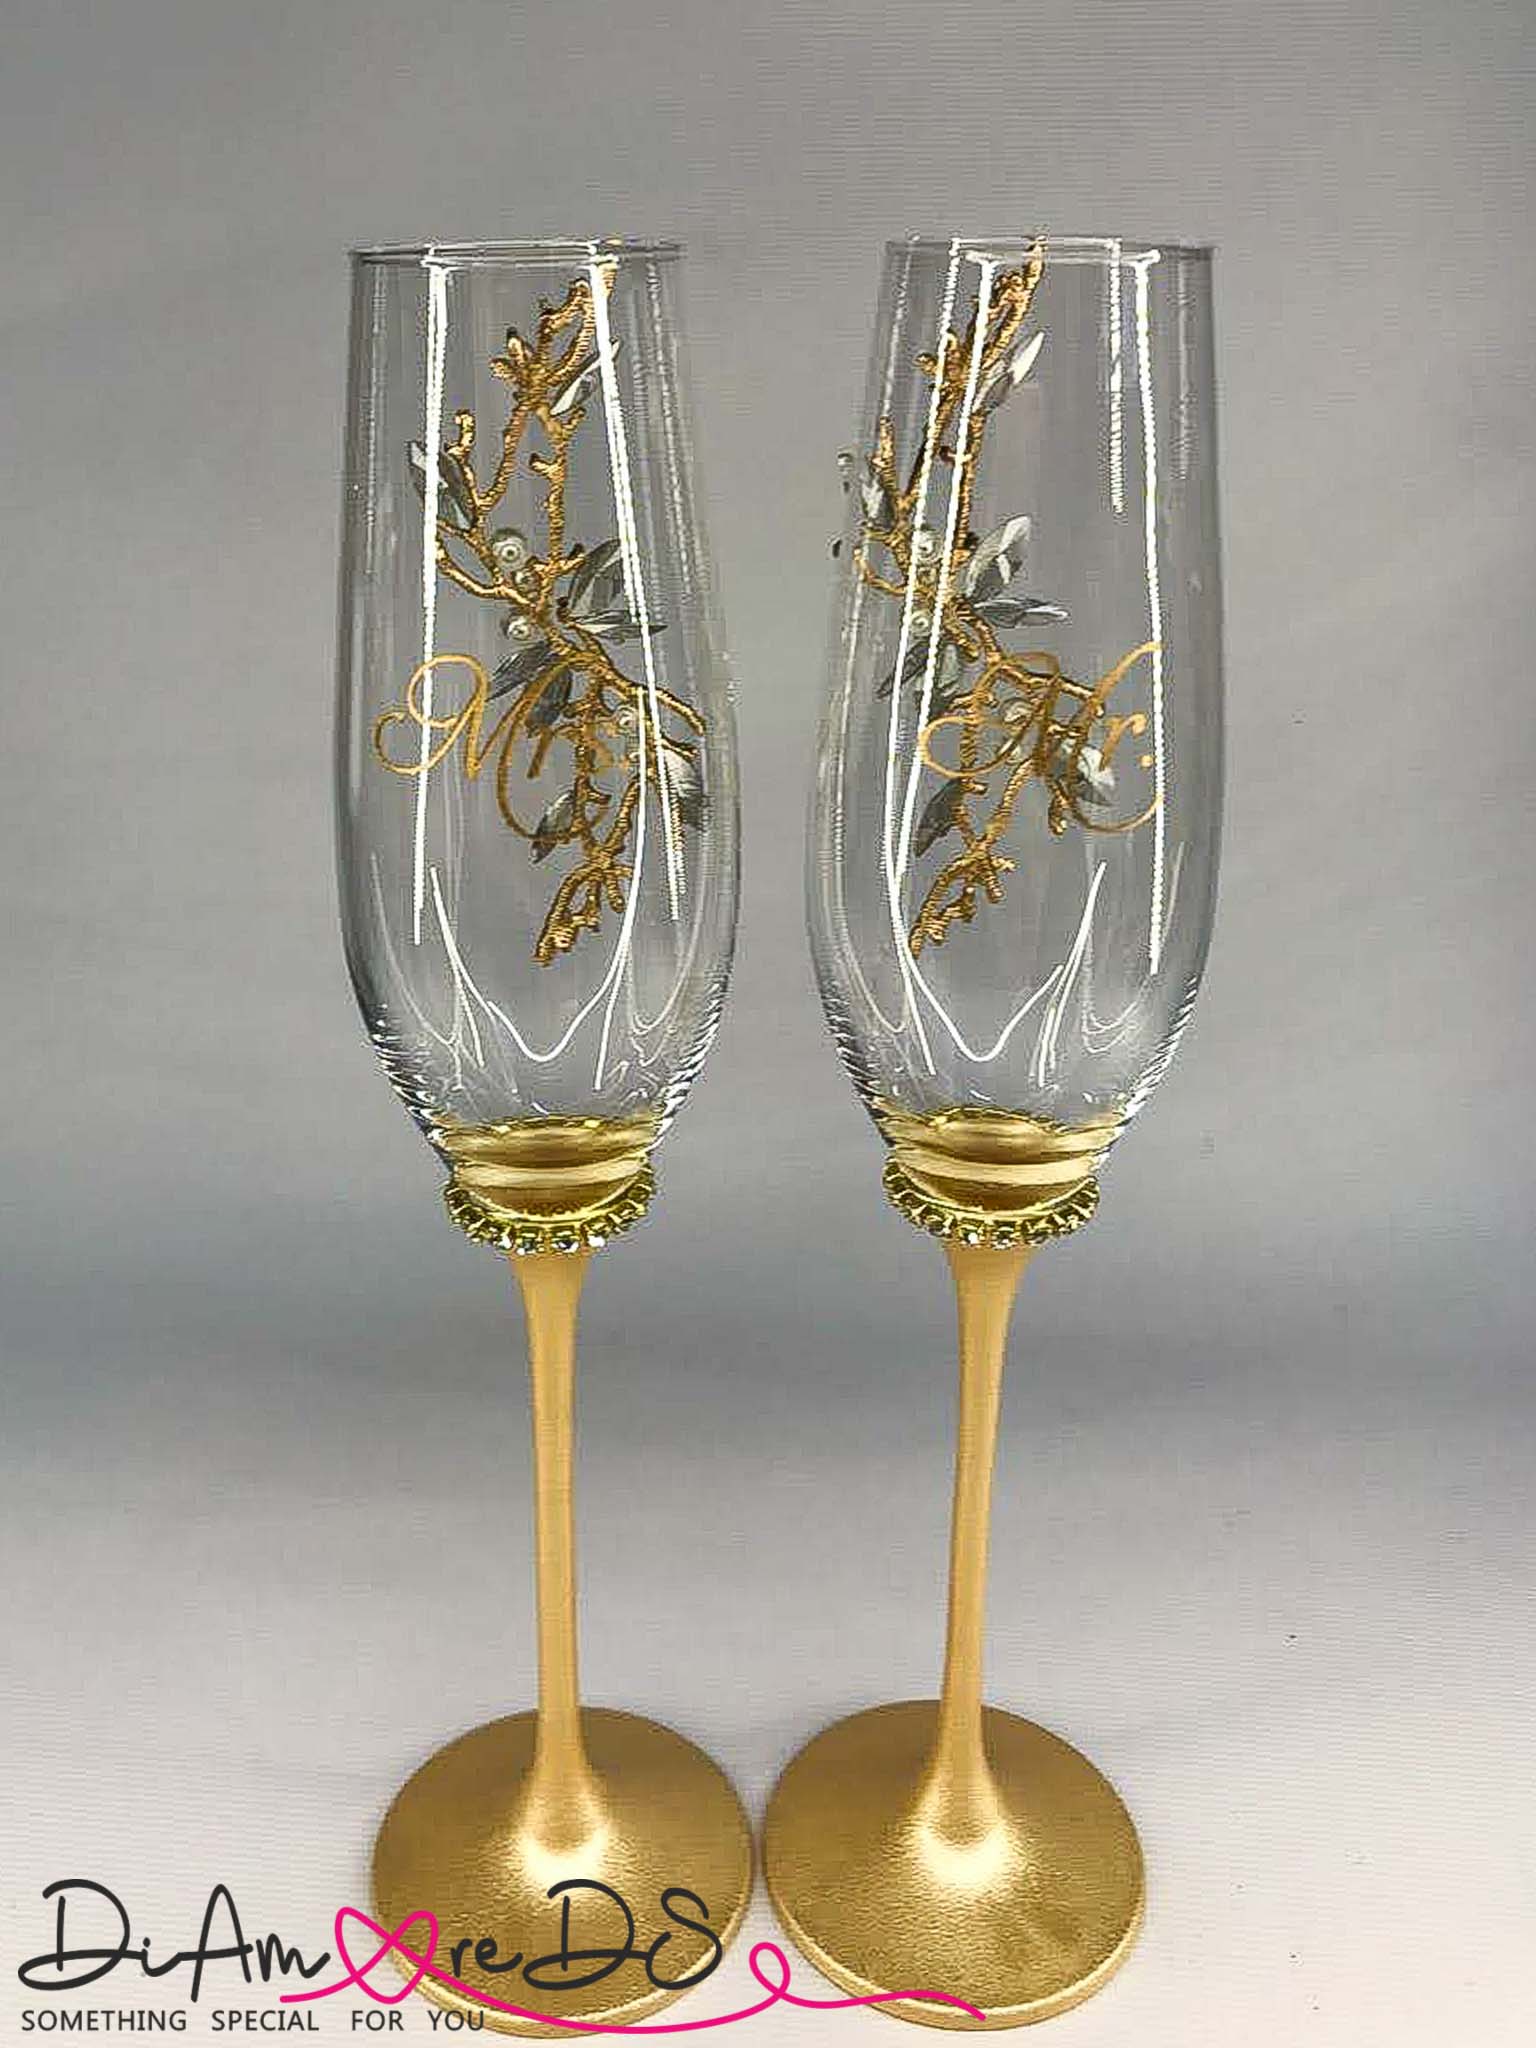 Elegant Fiora Gold wedding glasses for a memorable toast